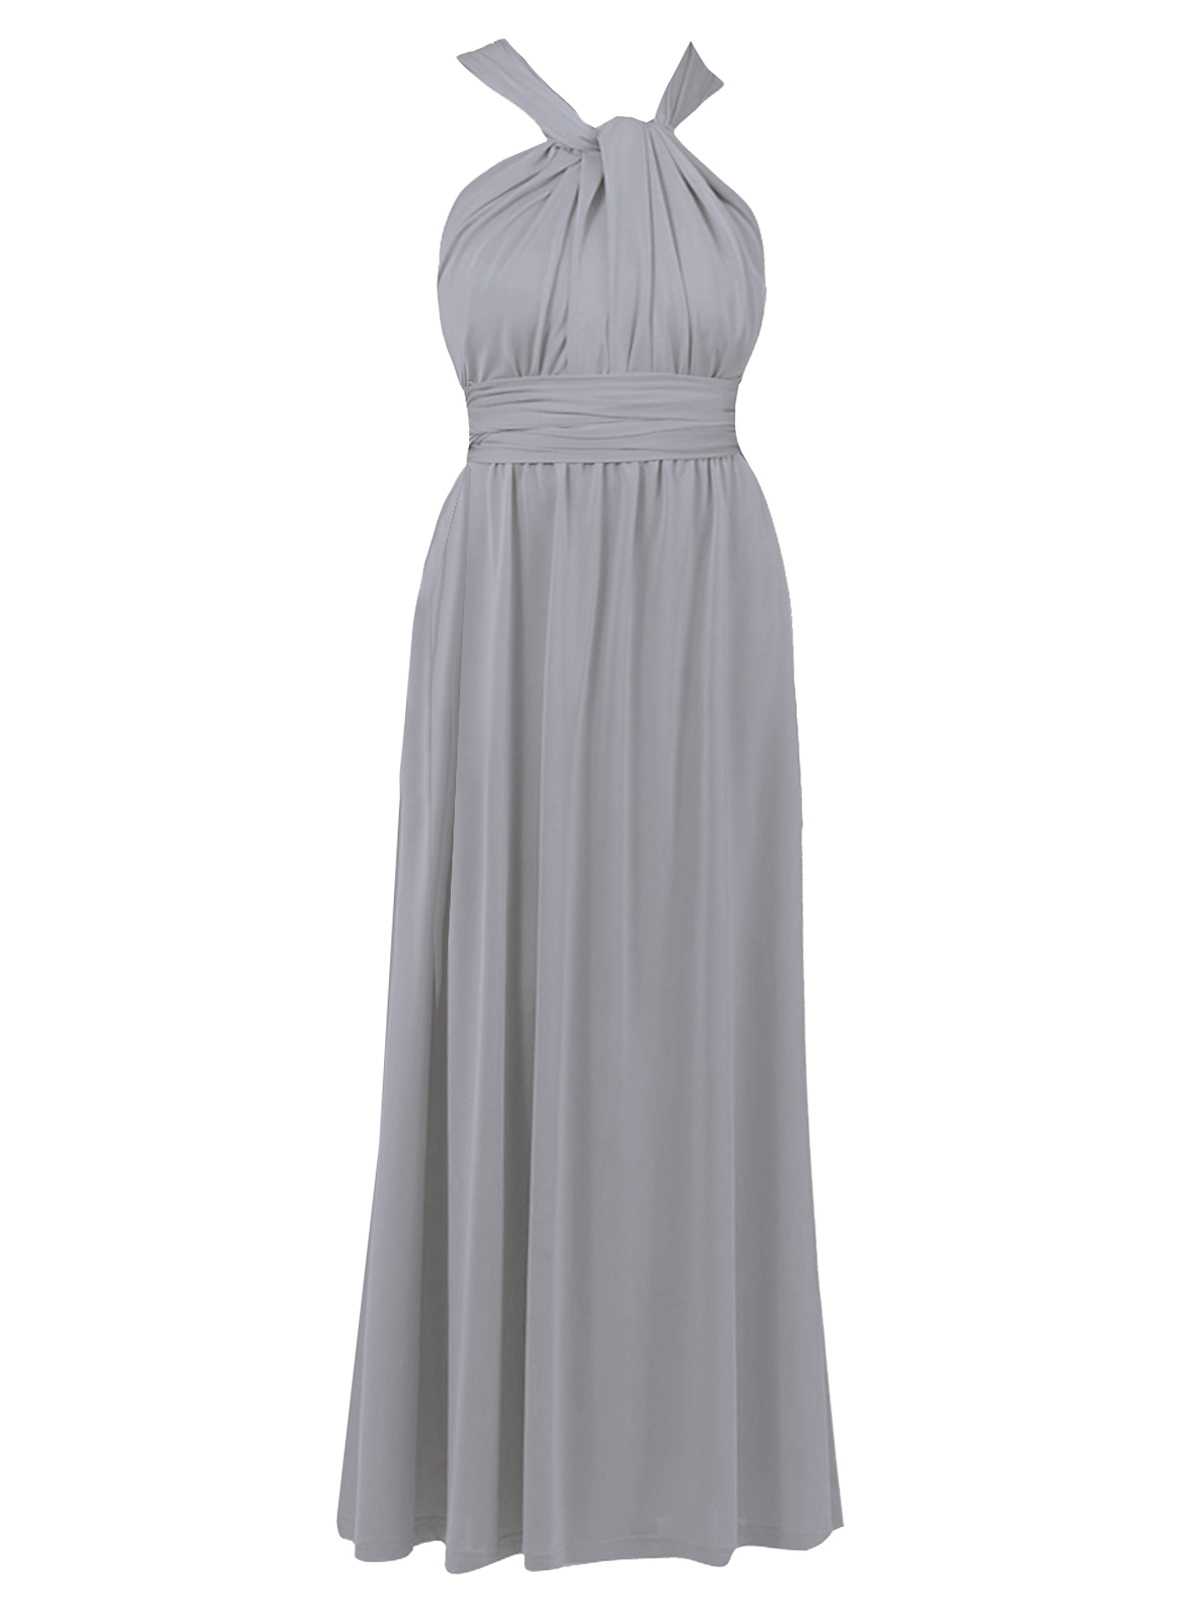 Debenhams - - D3benhams GREY Multiway Debut Long Evening Dress - Size 6 ...